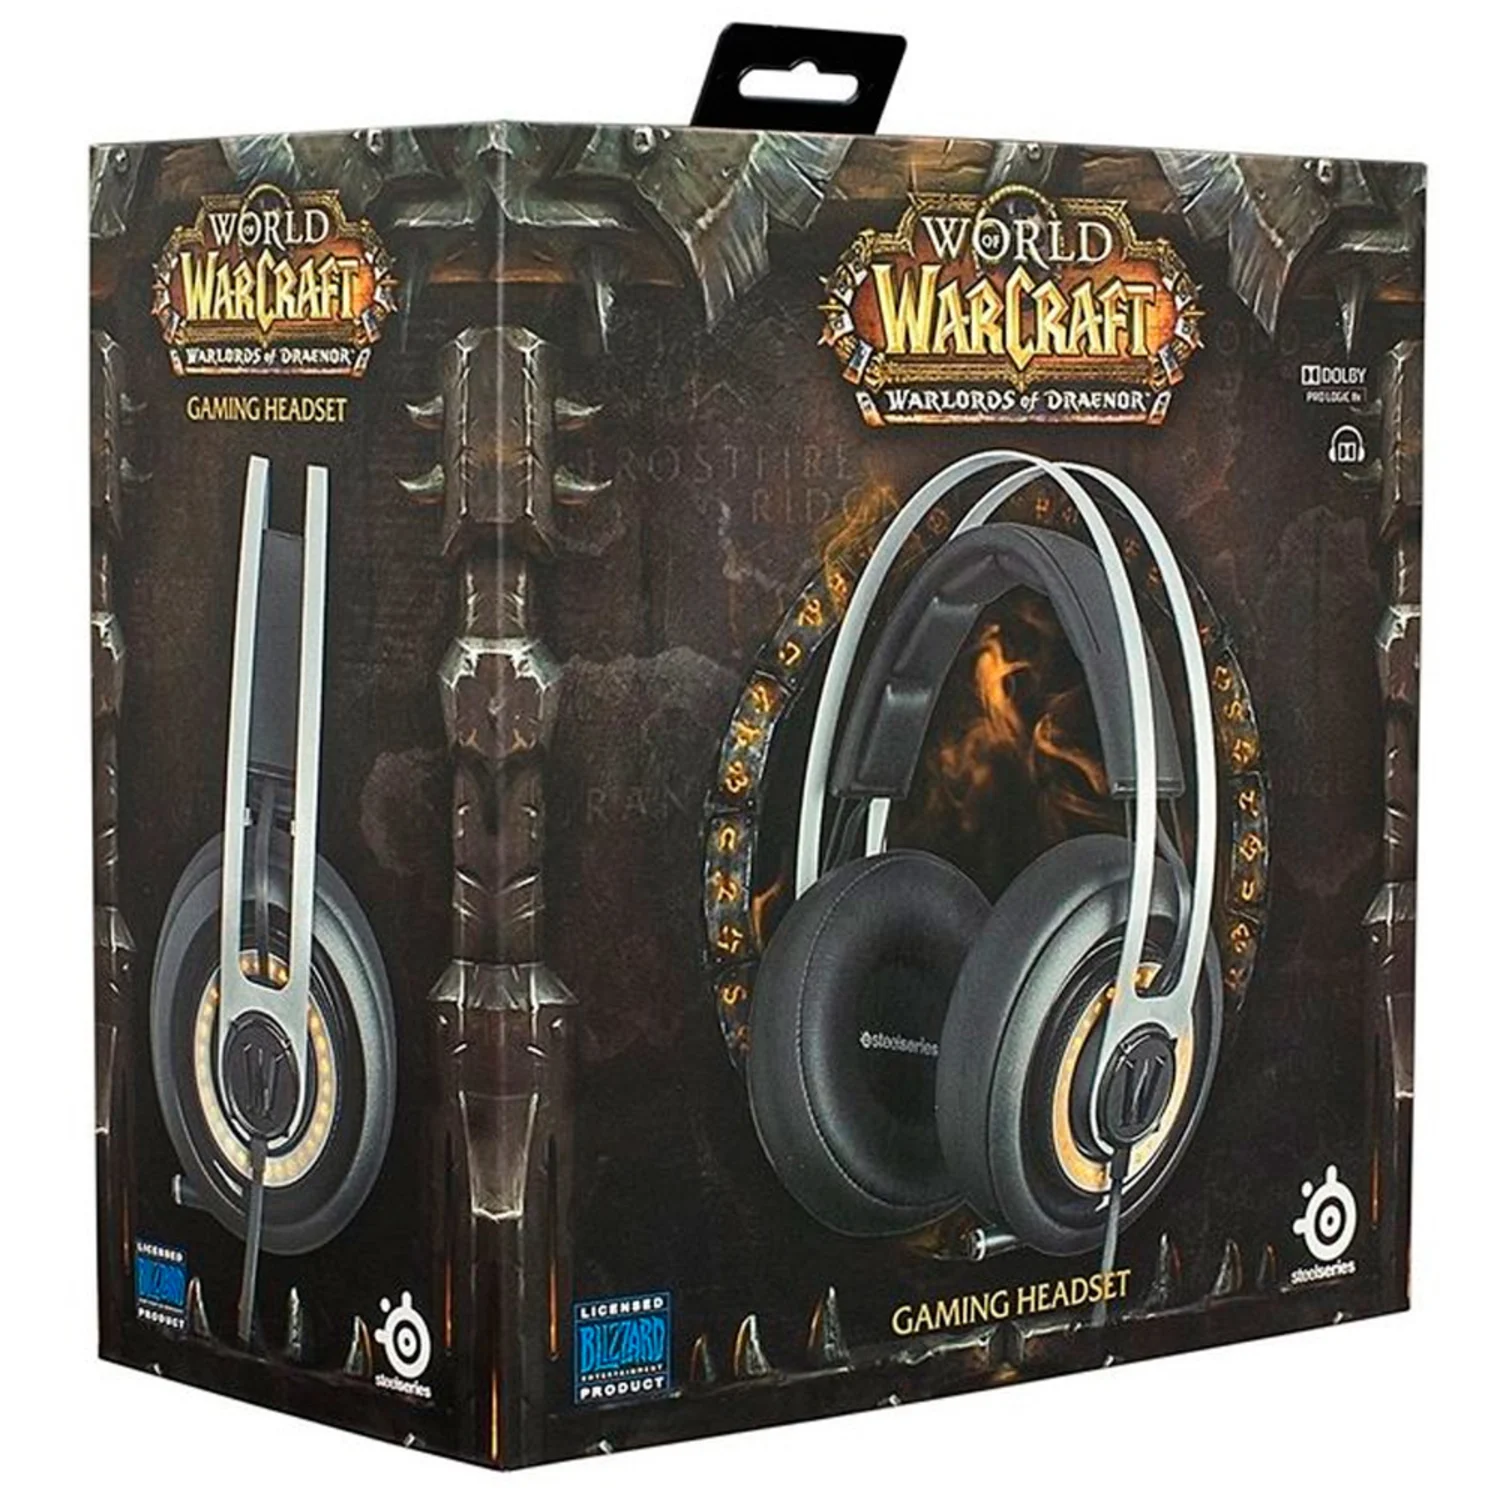 Headset Gamer Steelseries Siberia V2 World Of Warcraft - Preto e Branco (51154)